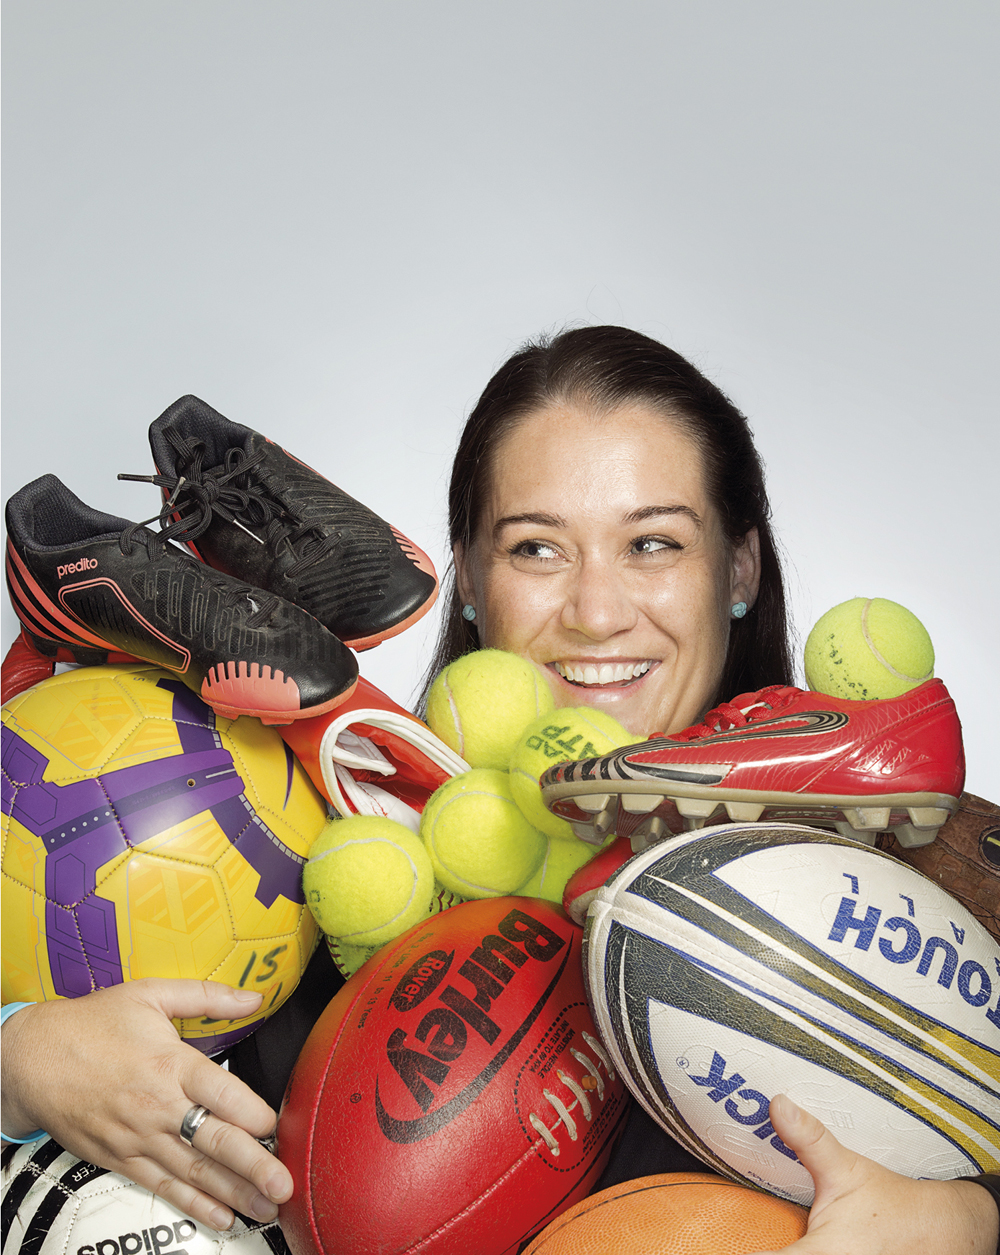 Portrait of Nicki Bardwell holding sports equipment